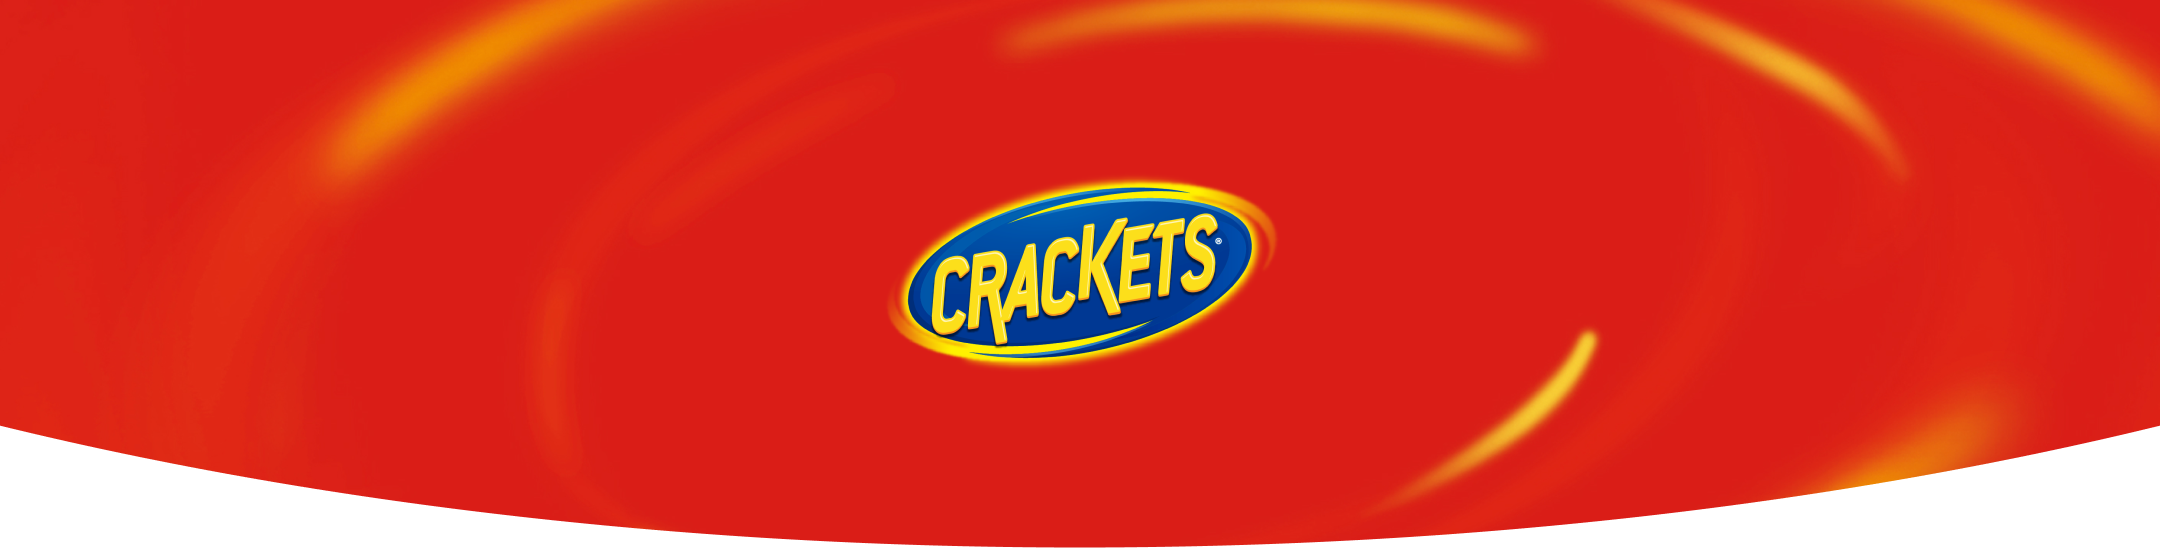  Crackets header desktop